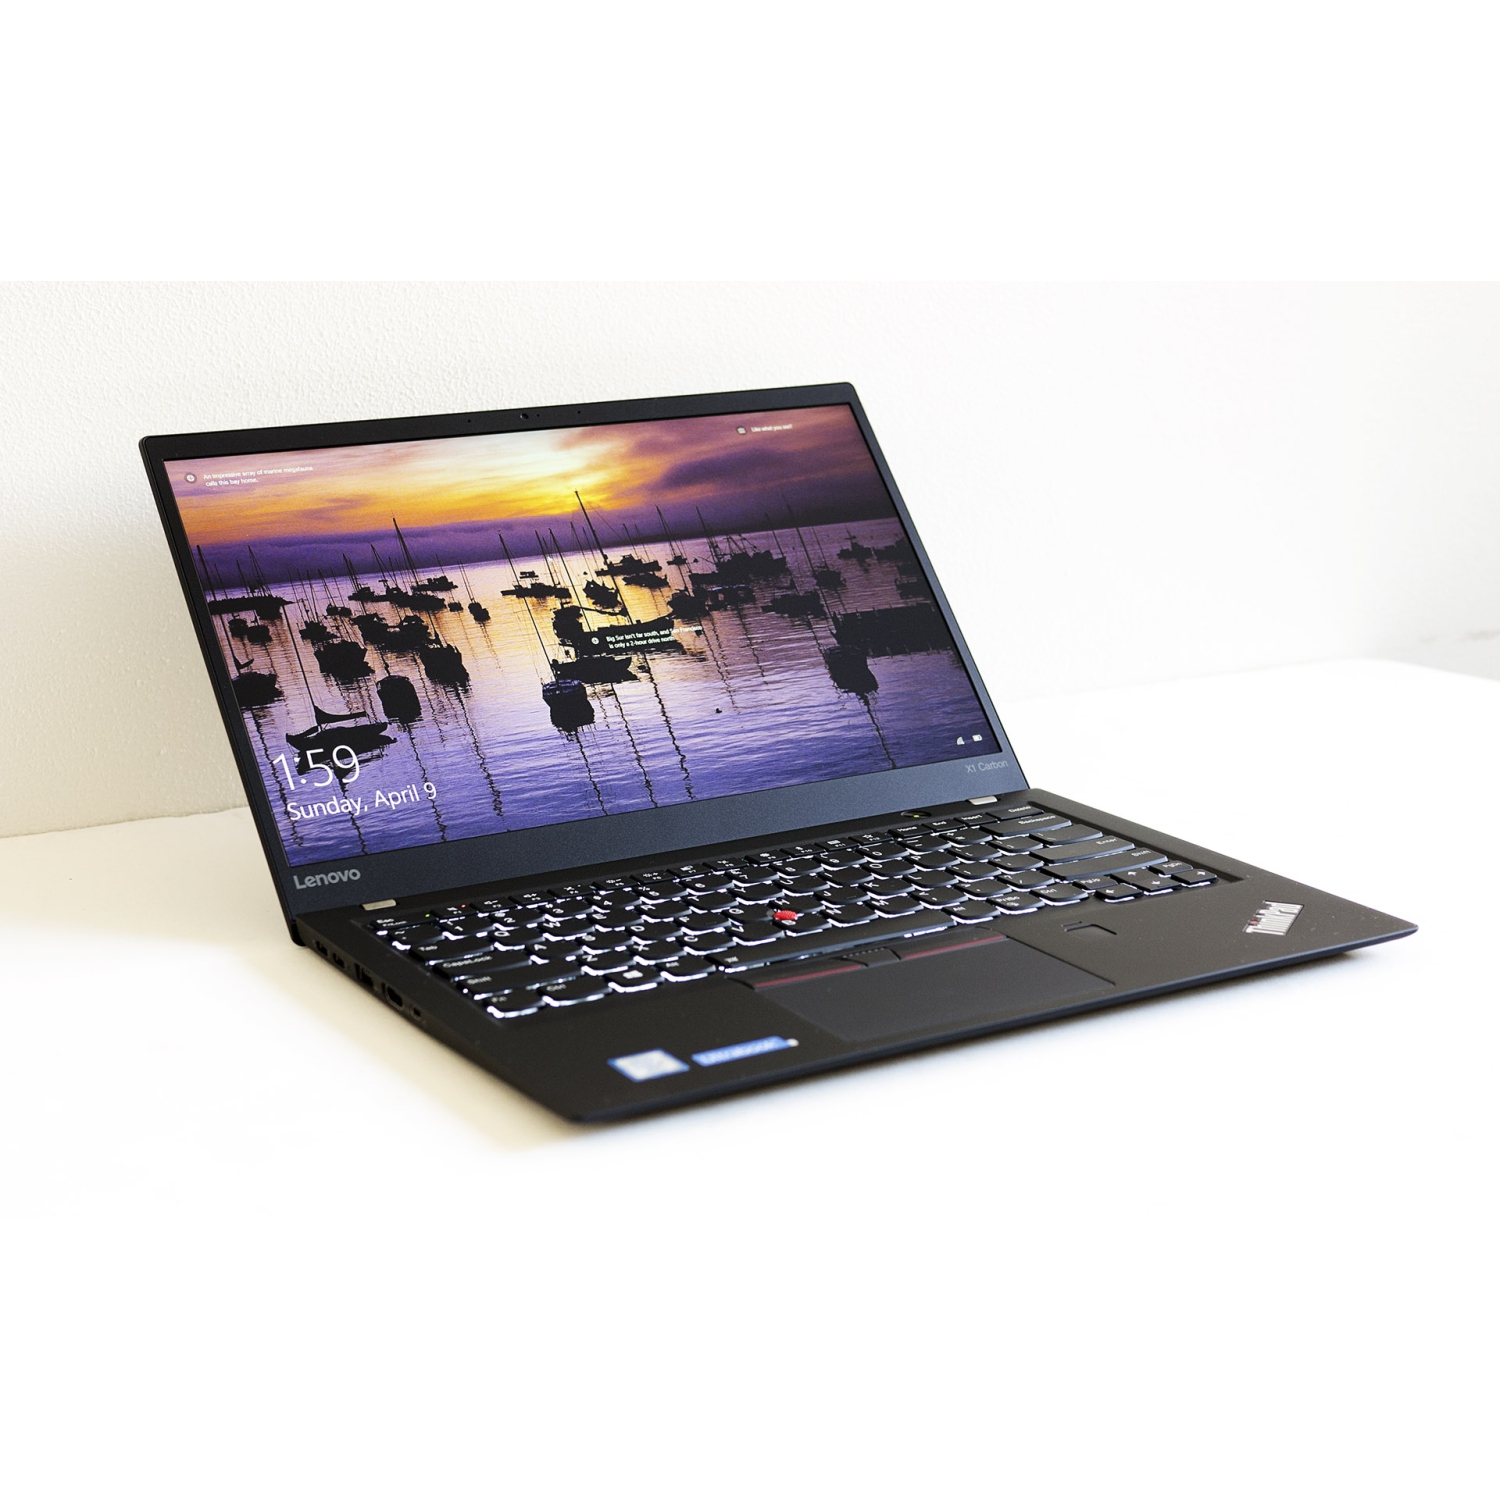 Refurbished (Good) - Lenovo X1 Carbon 14" Laptop, i7-8650U @ 1.9GHz, 16GB RAM, 256GB SSD, Win 10 Pro